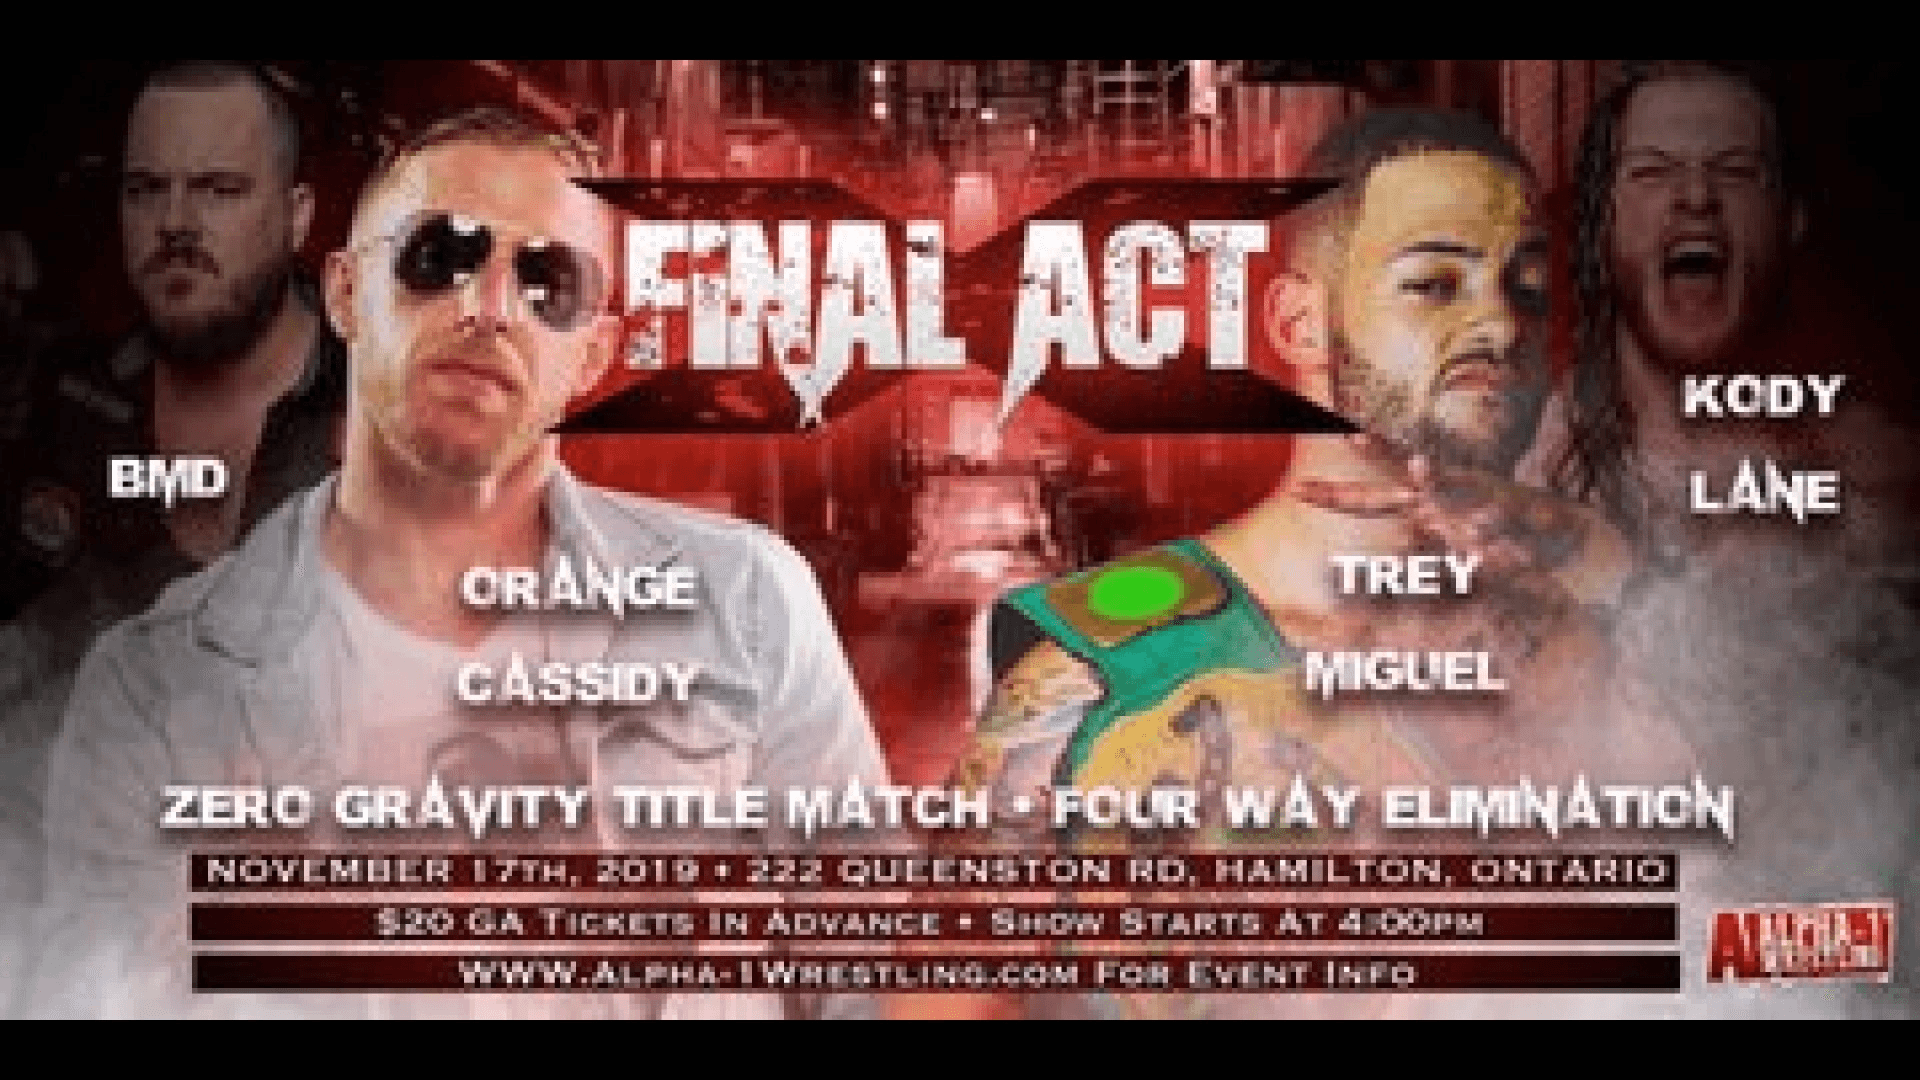 Orange Cassidy Vs Brett Michael David Vs Kody Lane Vs Trey Miguel Final Act 10 Alpha 1 Wrestling Impact Wrestling